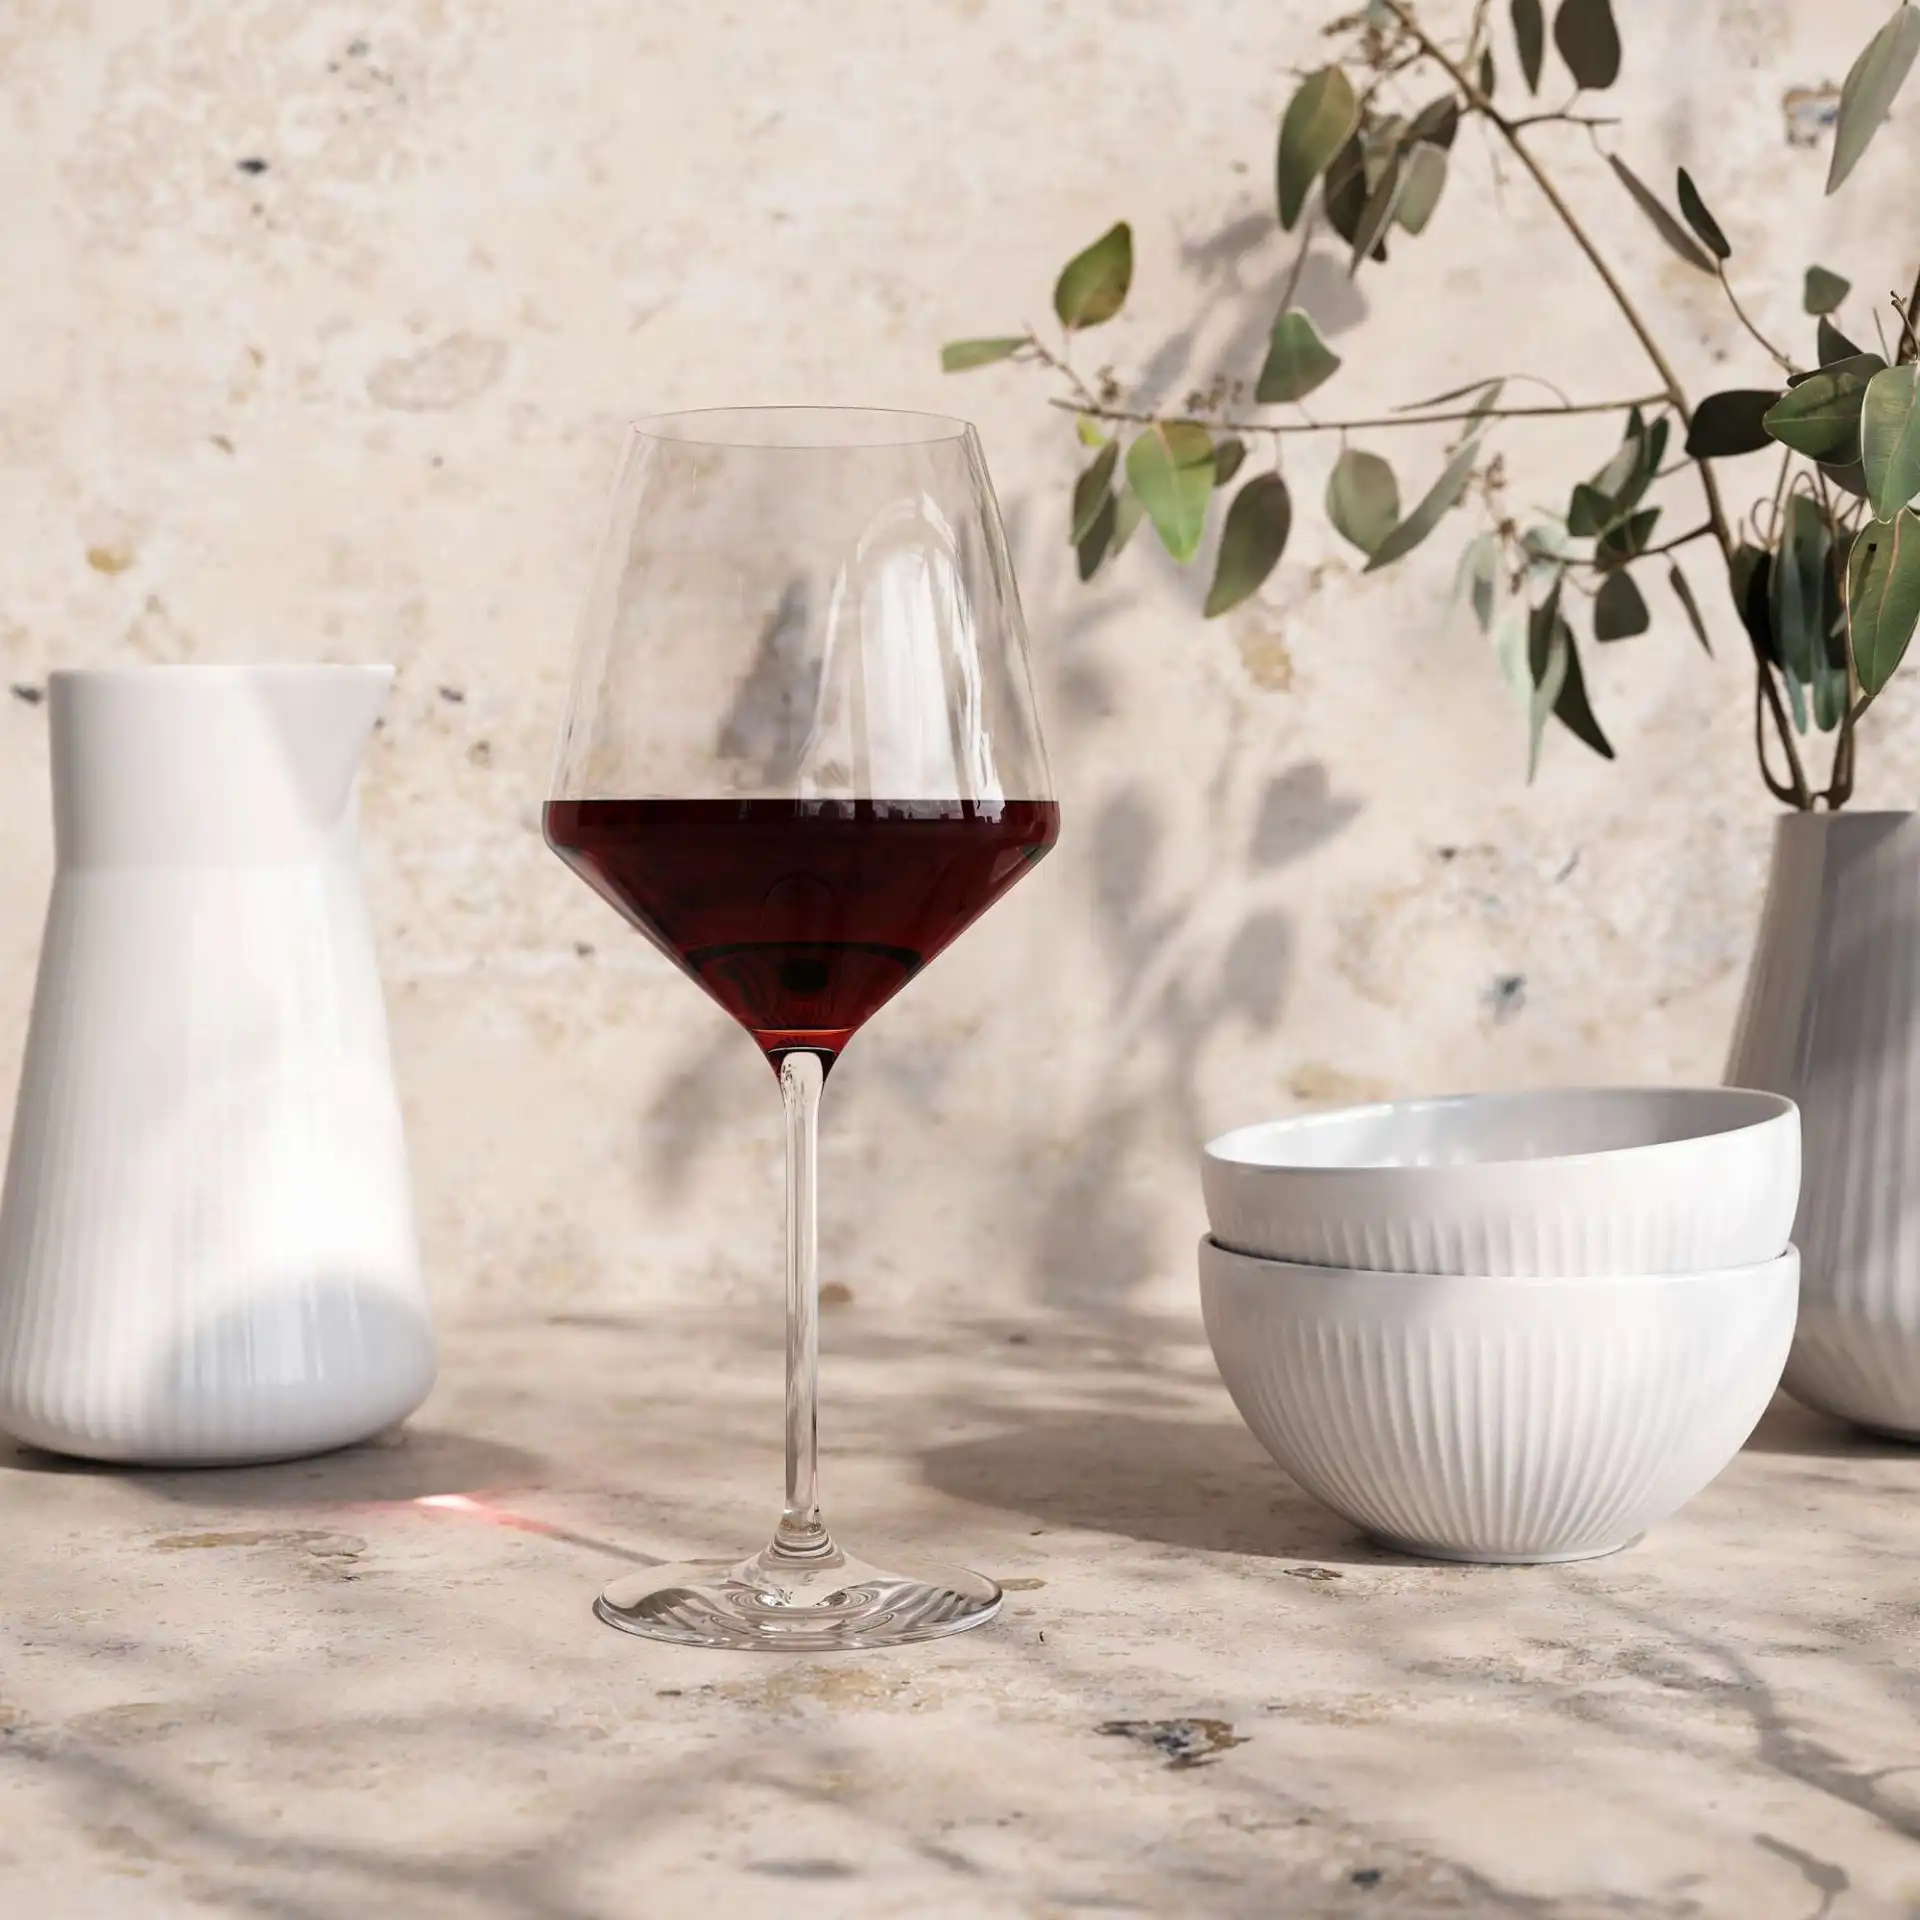 541201-887263-legio-nova-red-white-wine-glass-bowls-filled-closeup2.webp